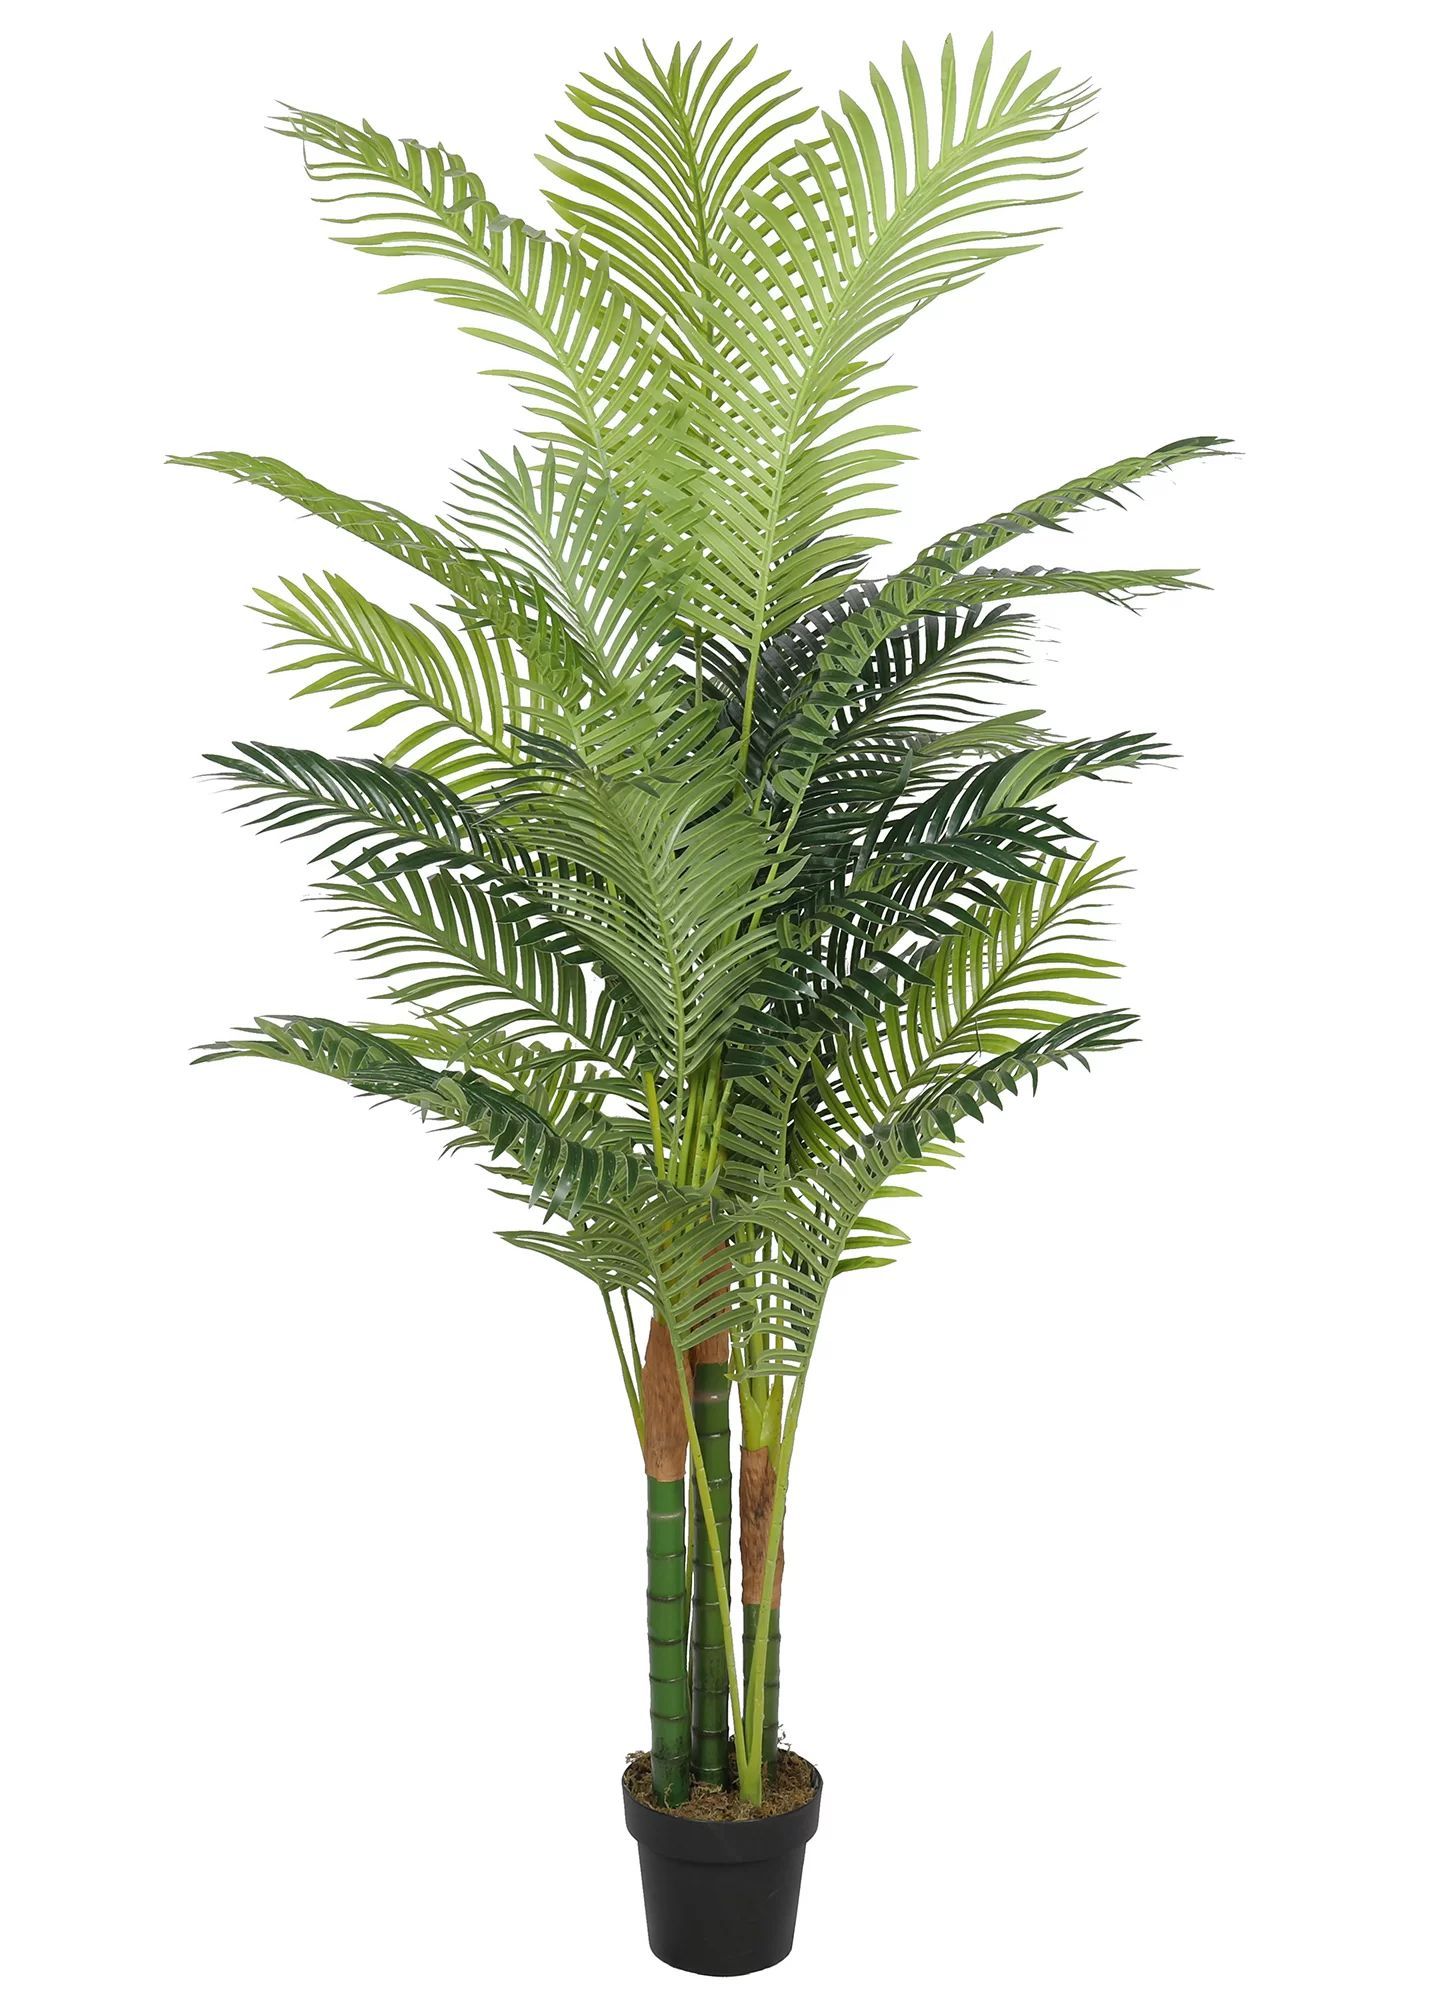 68" Artificial Palm Plant in Pot | Wayfair Professional